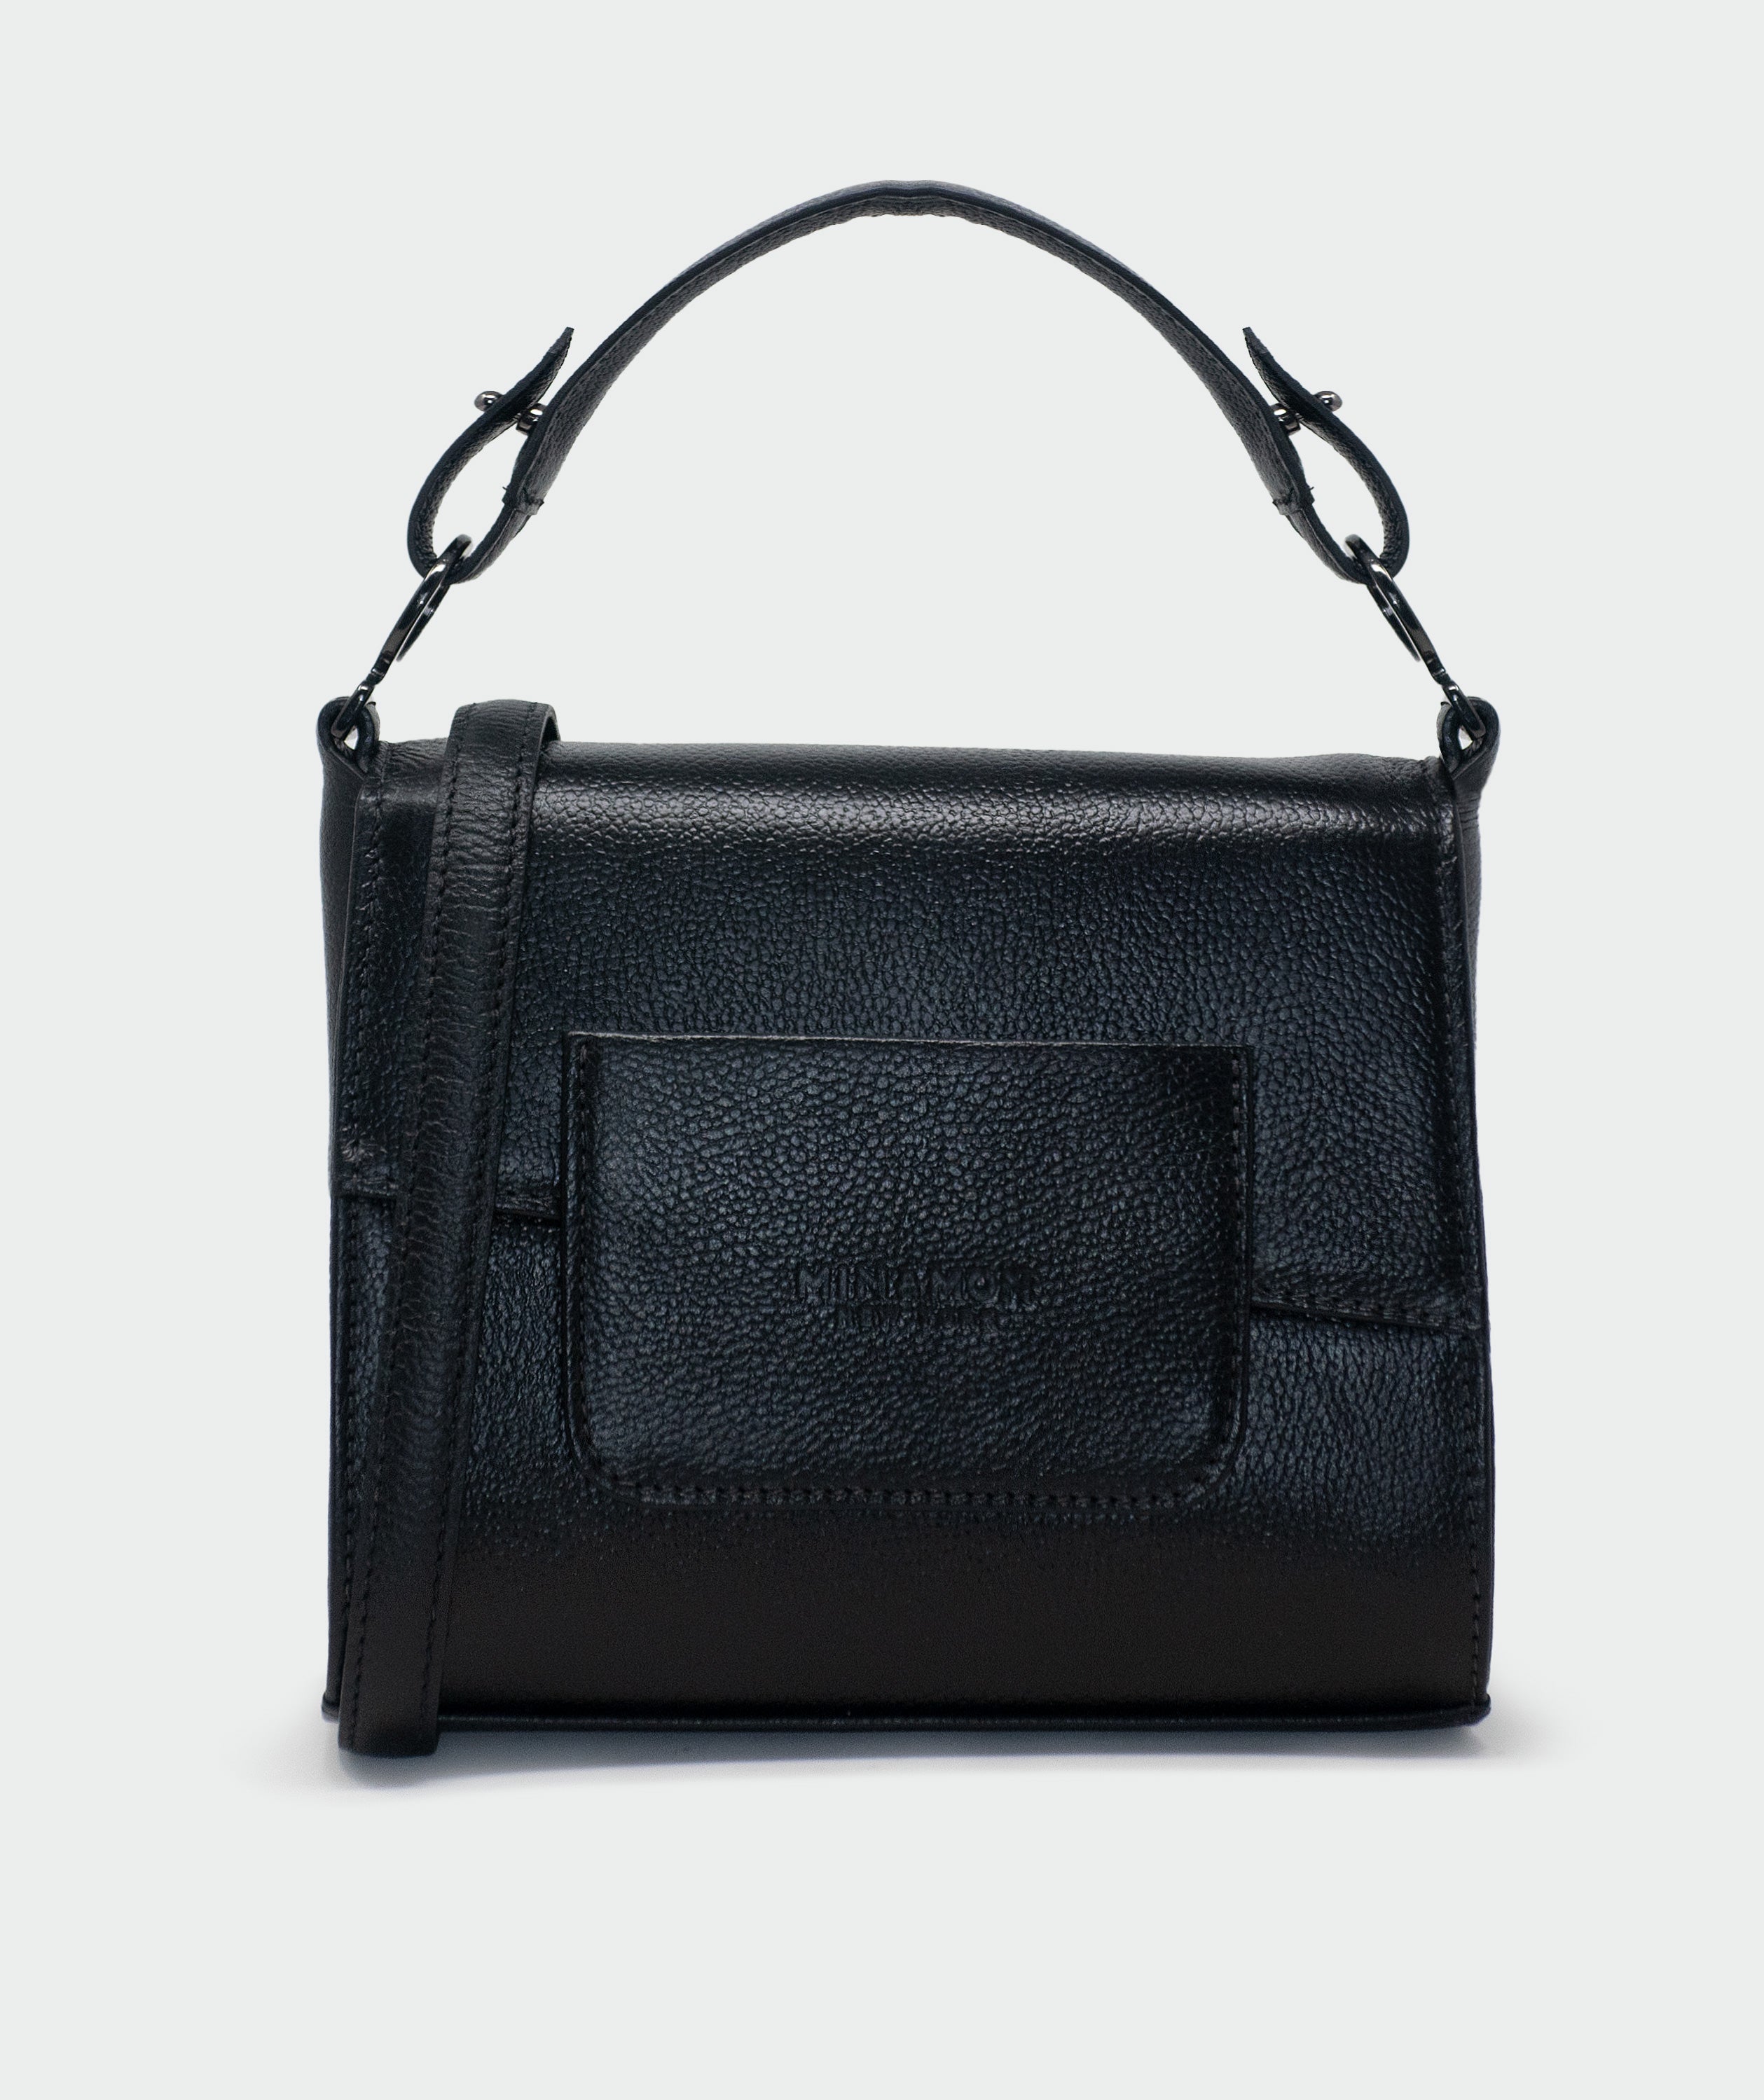 Anastasio Micro Crossbody Handbag Black Leather - Eyes Embroidery Print - Back view